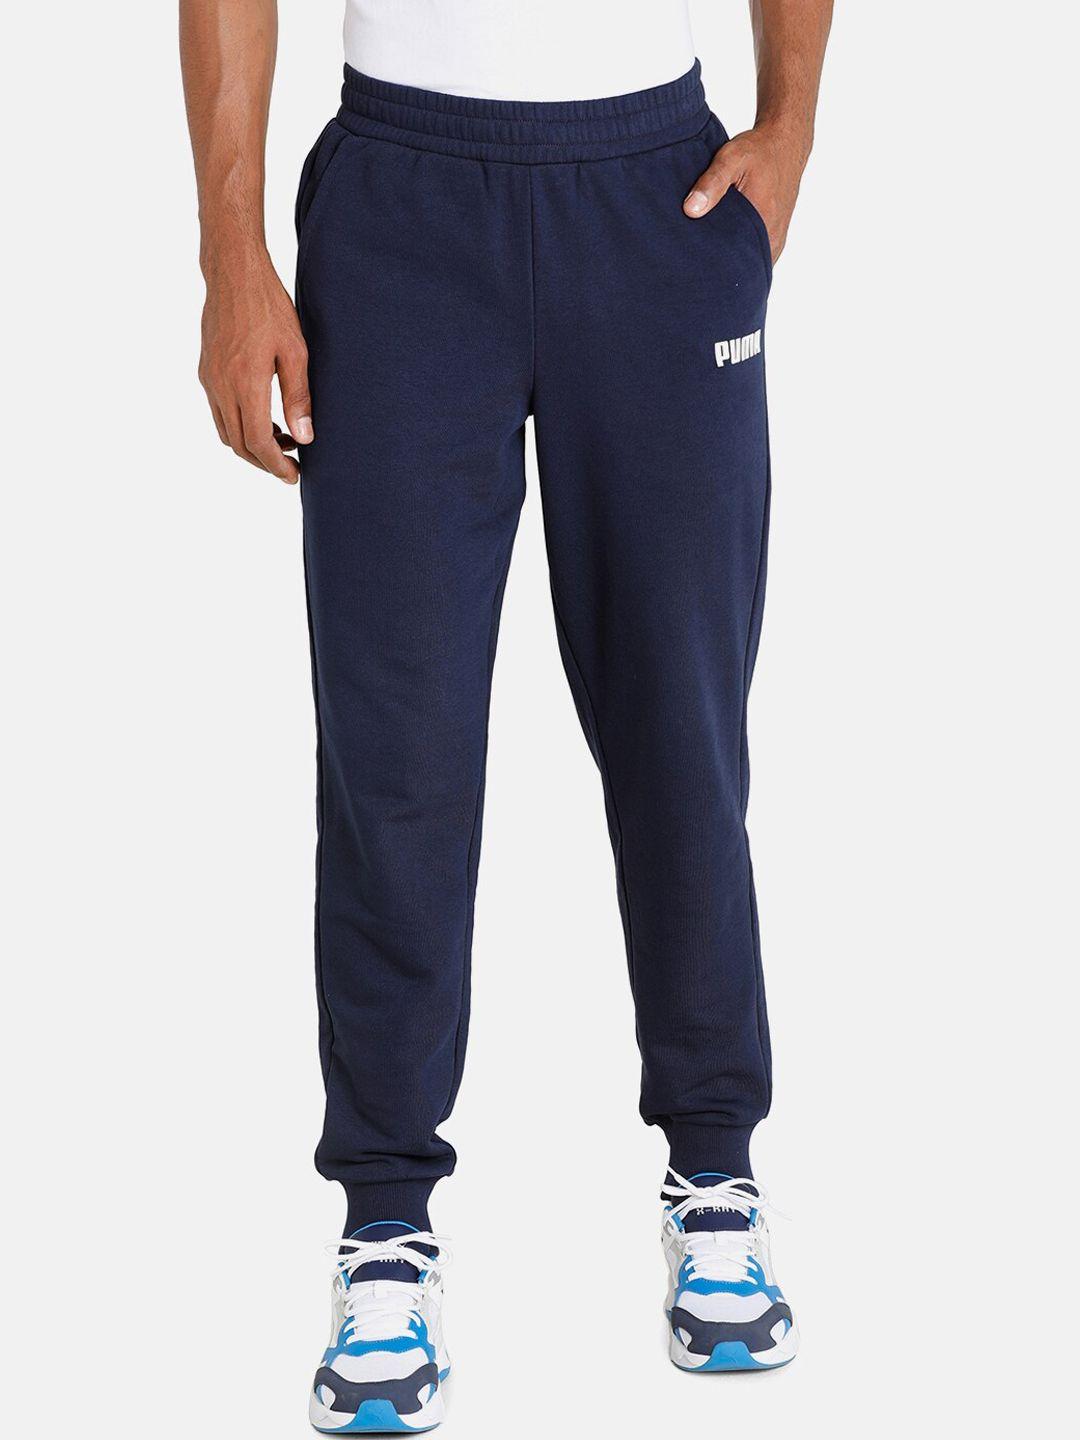 puma men blue brand logo printed track pants